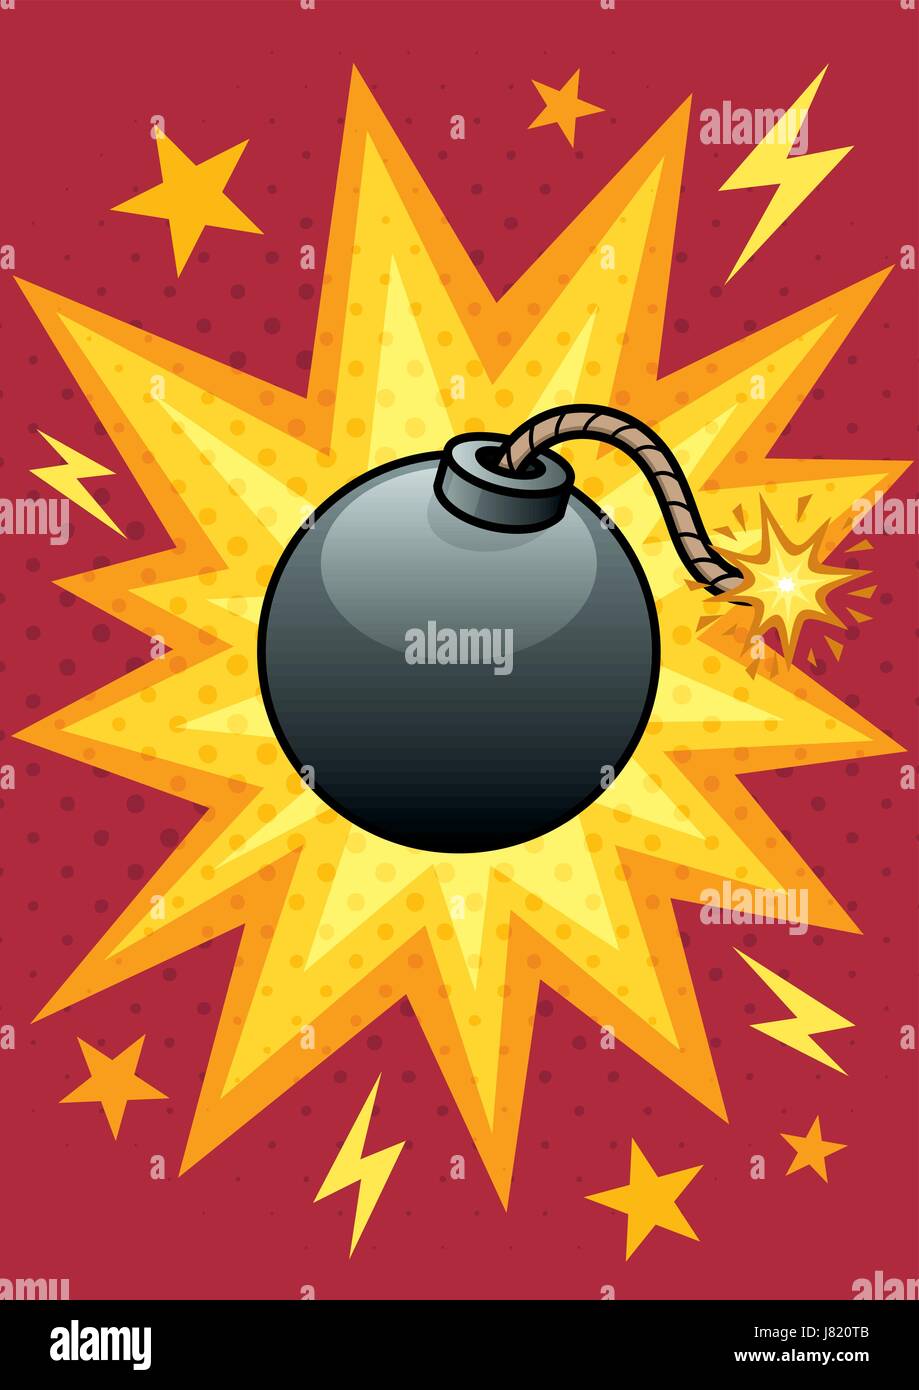 Cartoon illustration of bomb with blasting background. Stock Vector